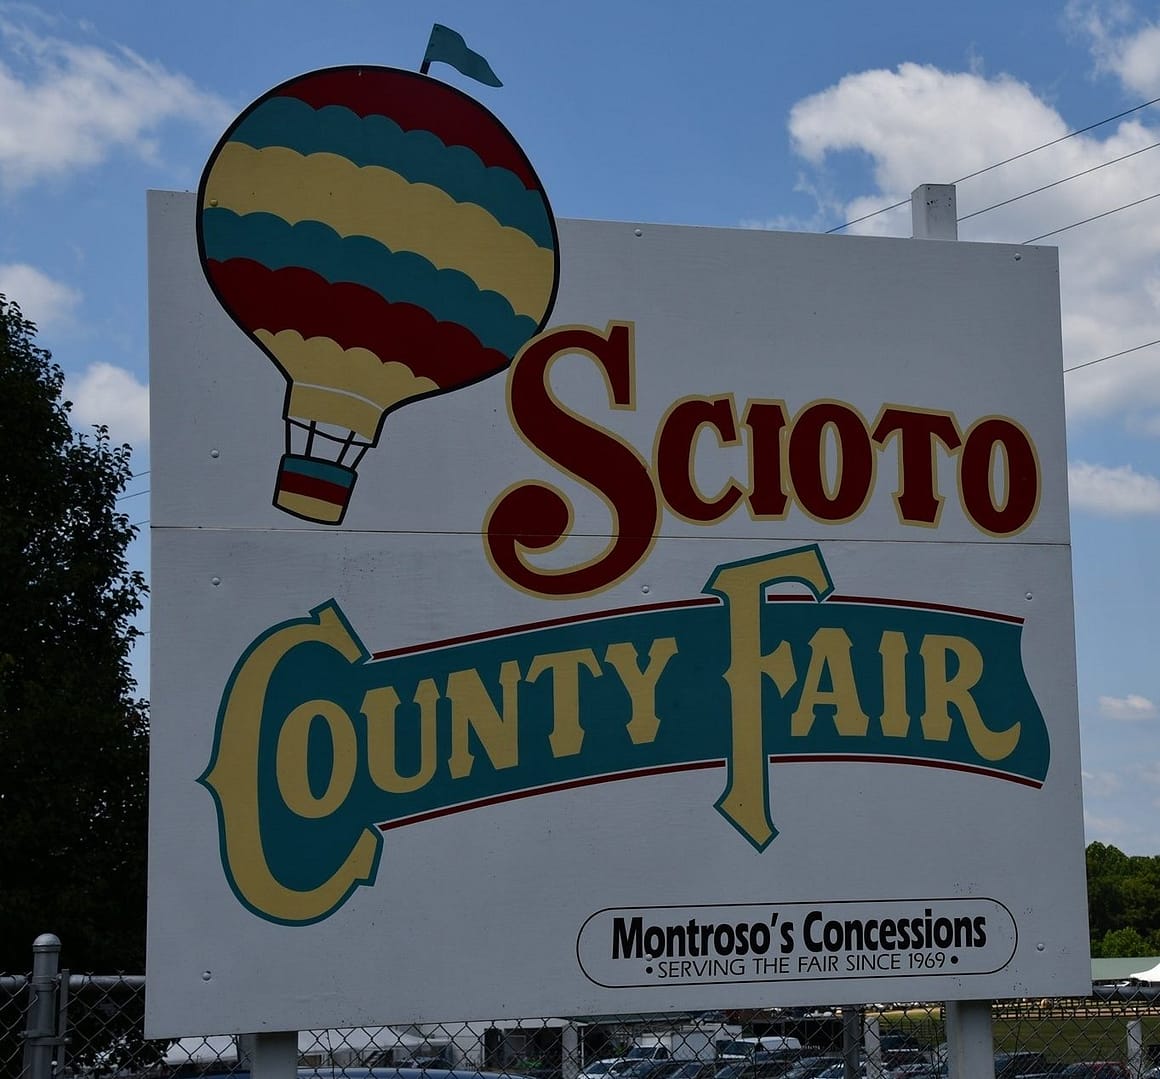 Scioto County Fairgrounds